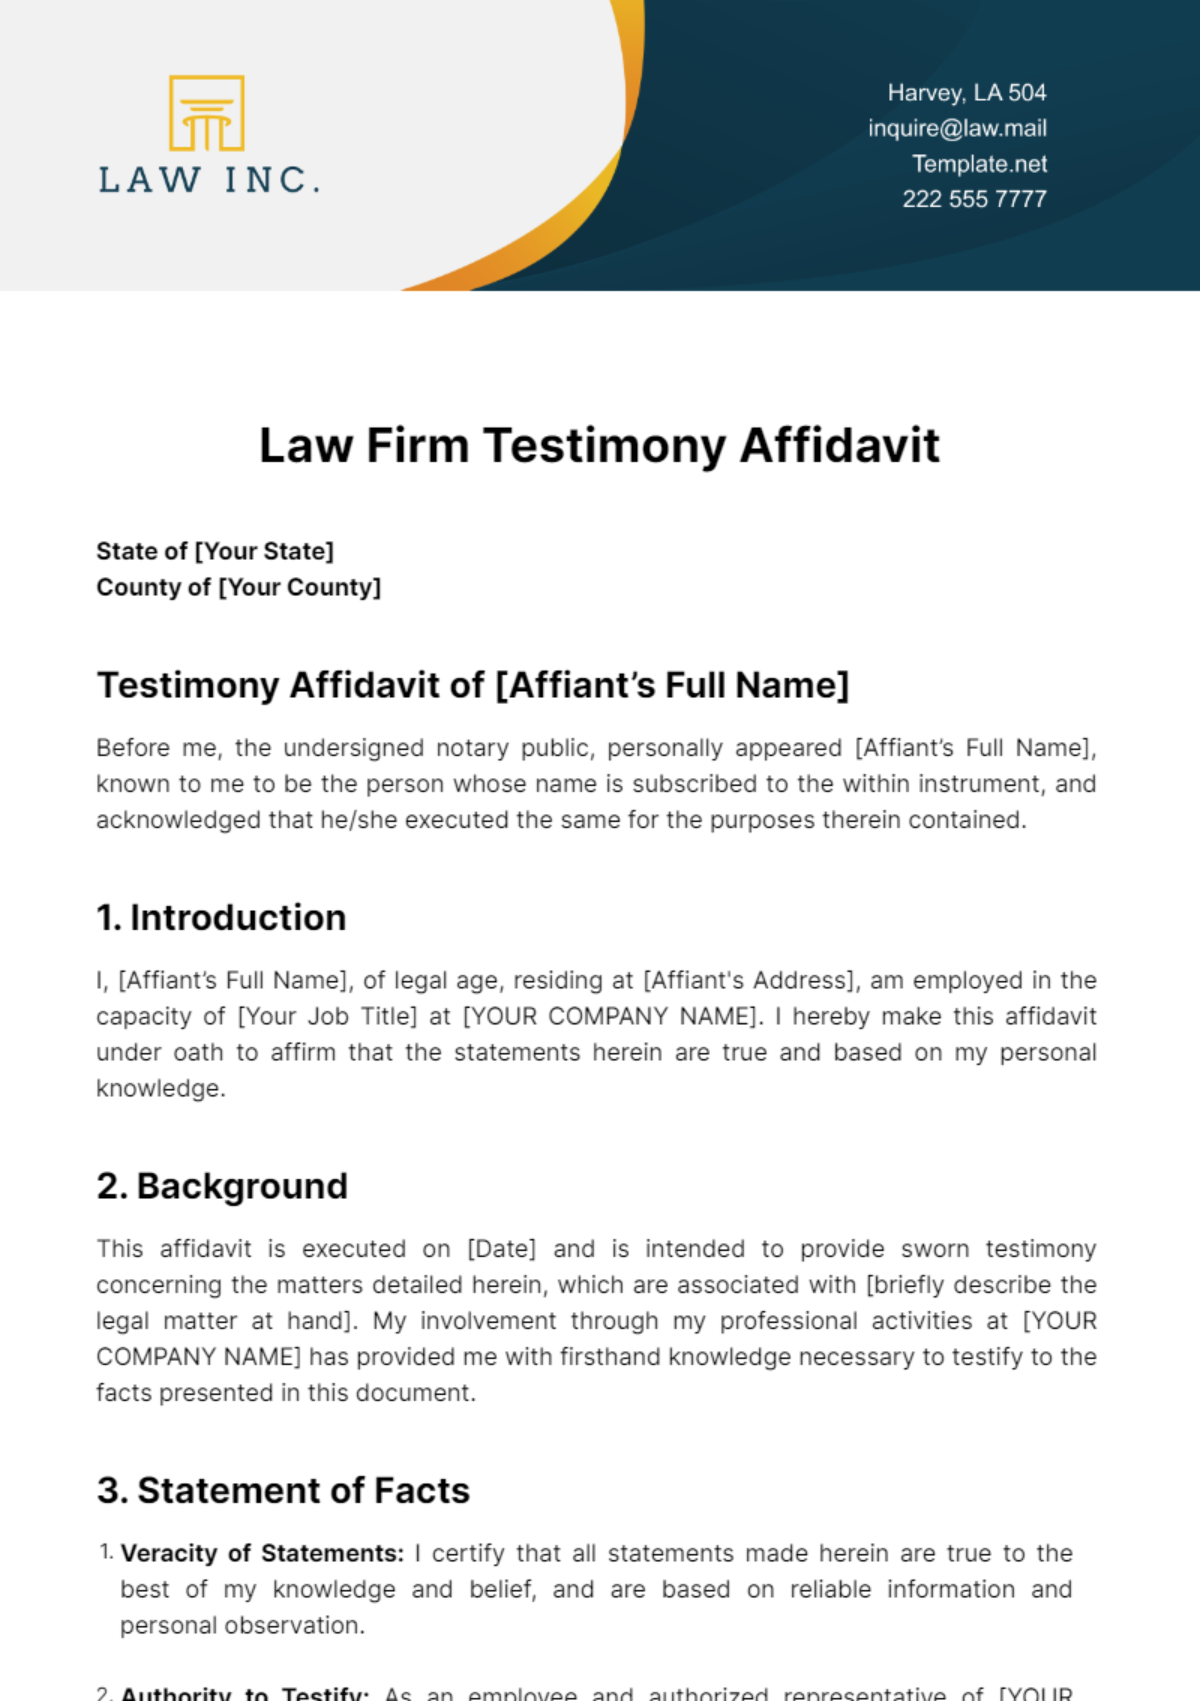 Free Law Firm Testimony Affidavit Template